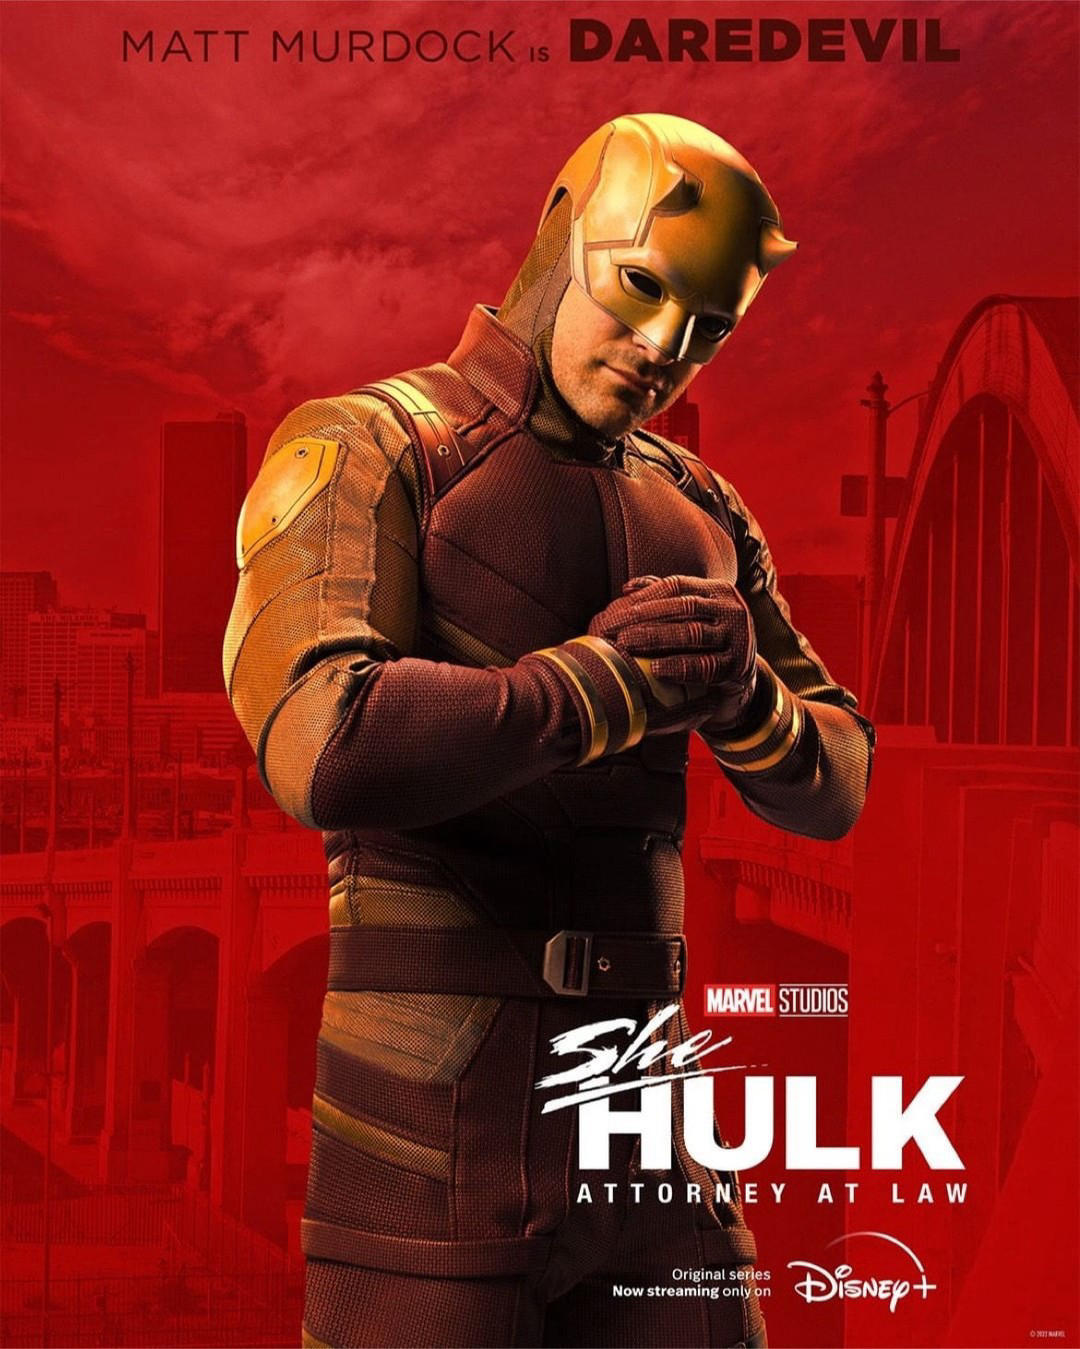 Rotten Tomatoes - New #SheHulk character poster for #Daredevil